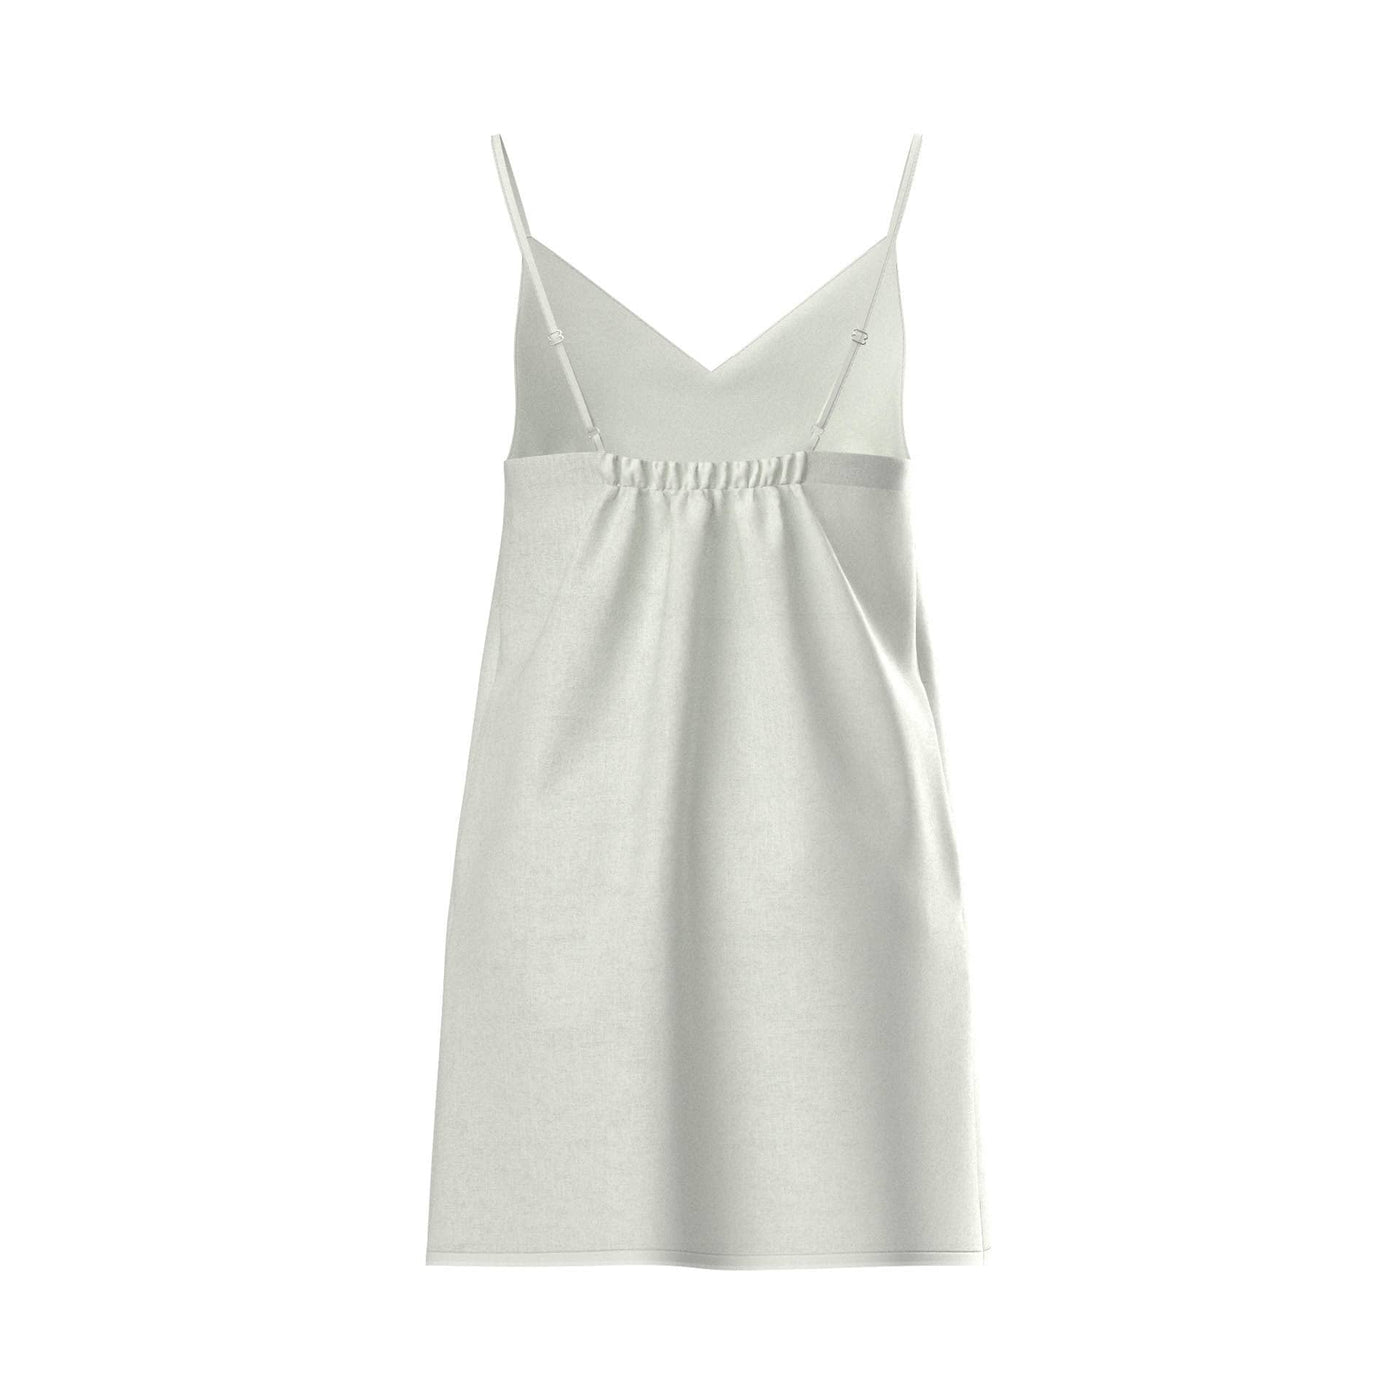 Liz Linen Slip by LILLY PILLY - 100% Organic Linen dresses & clothing ...